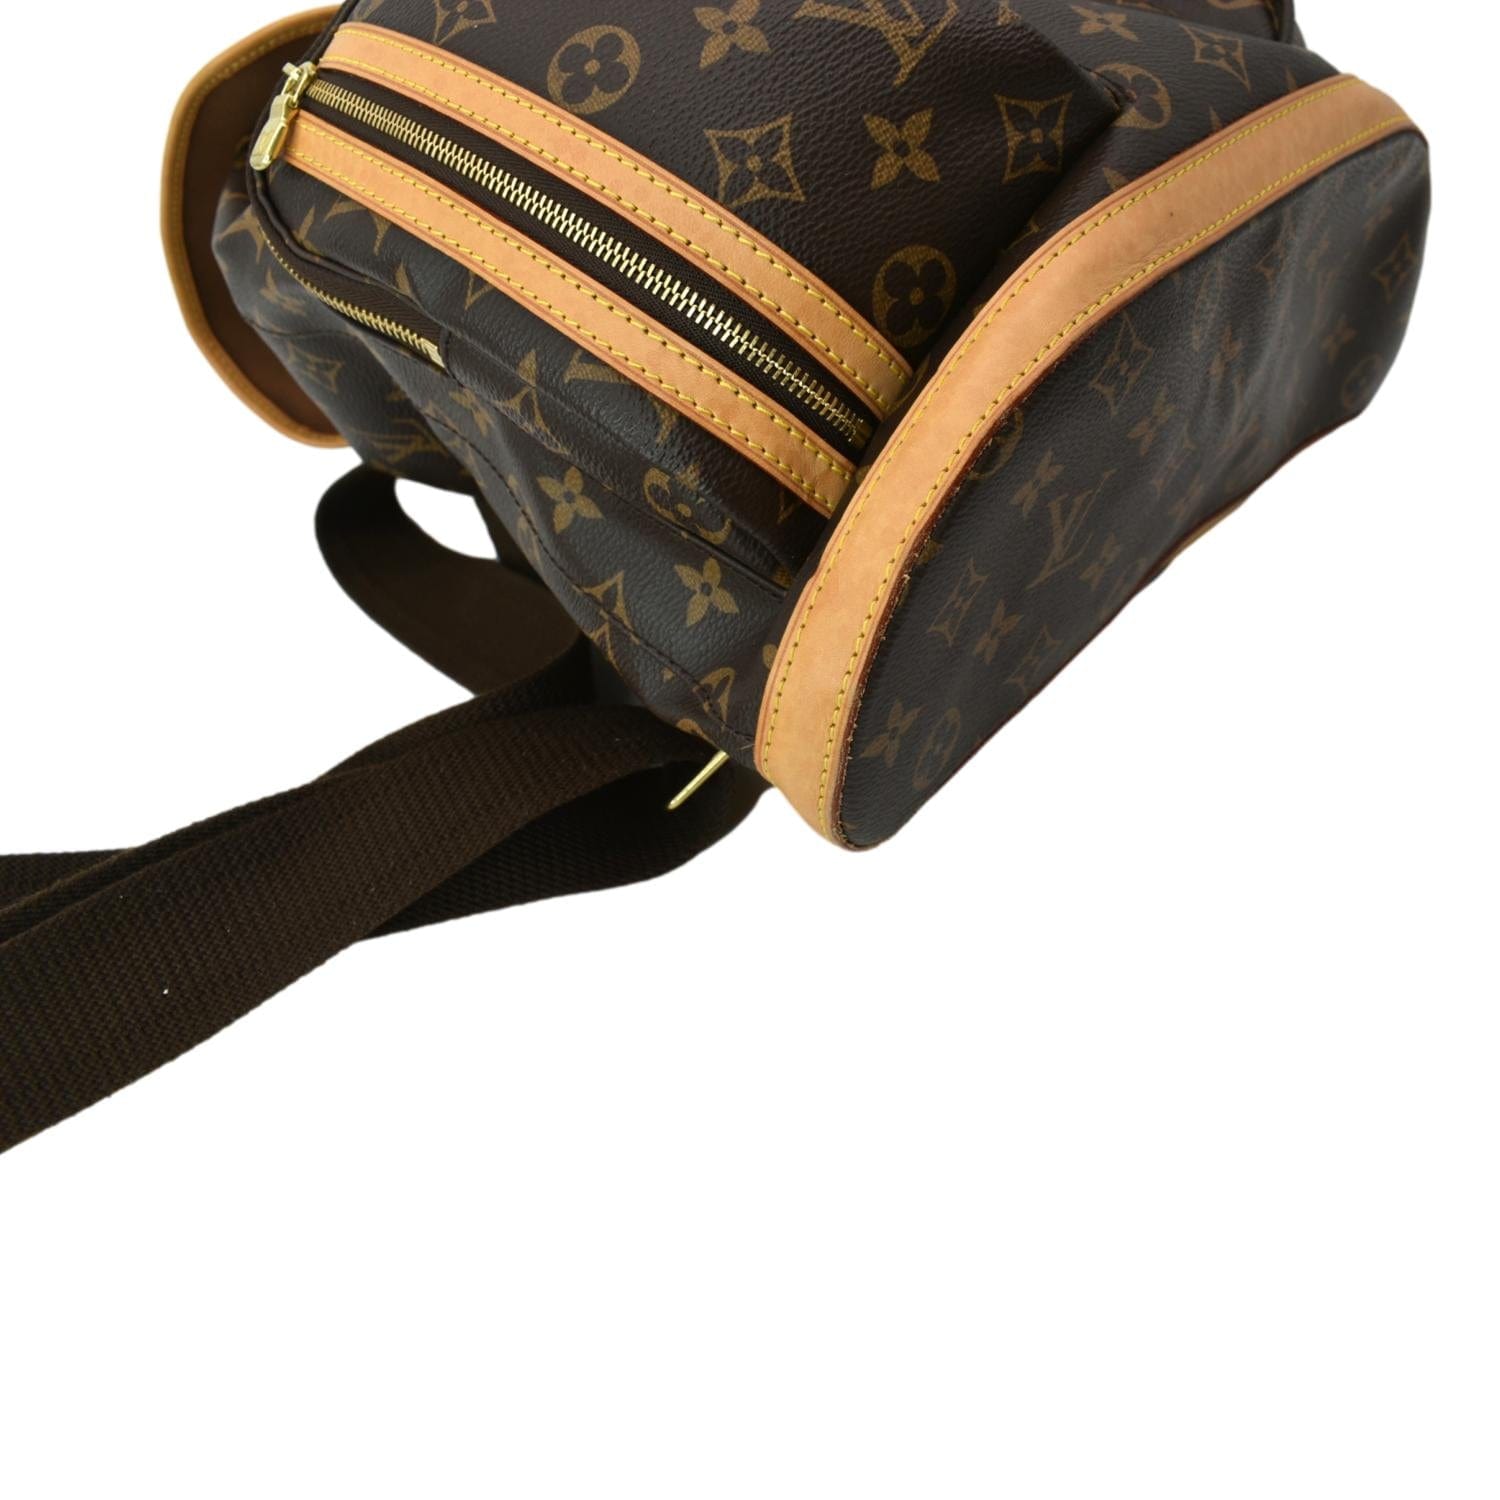 Louis Vuitton Sac A Dos Bosphore Monogram Backpack Bag